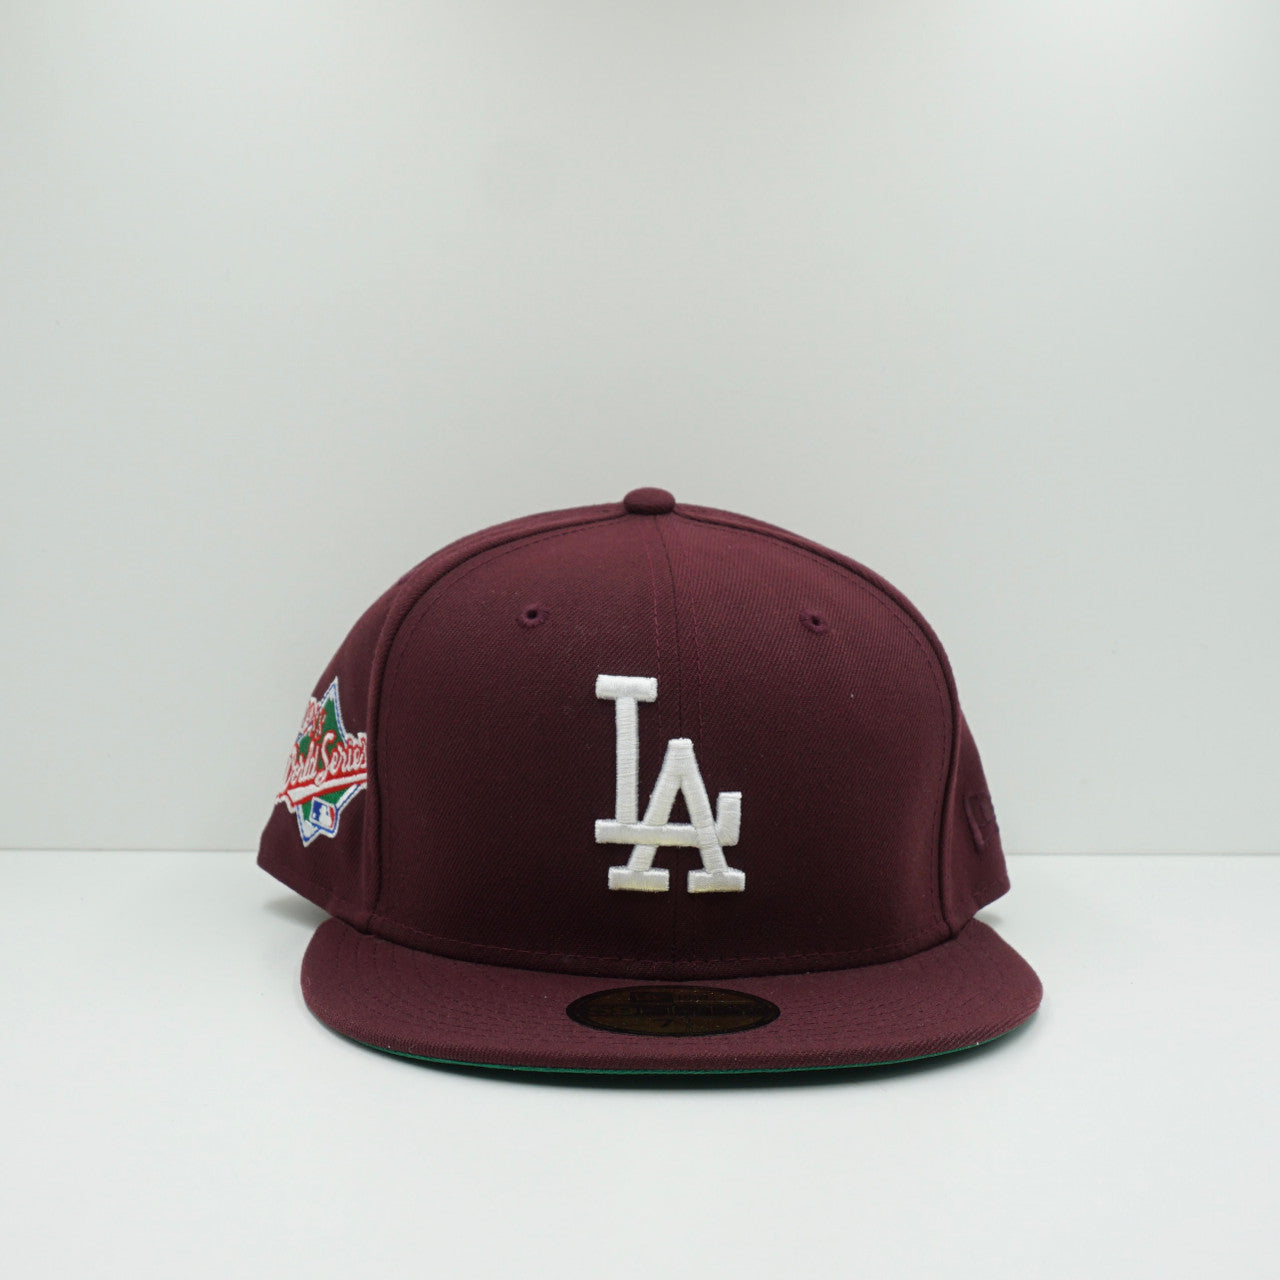 New Era LA Dodgers Maroon Fitted Cap